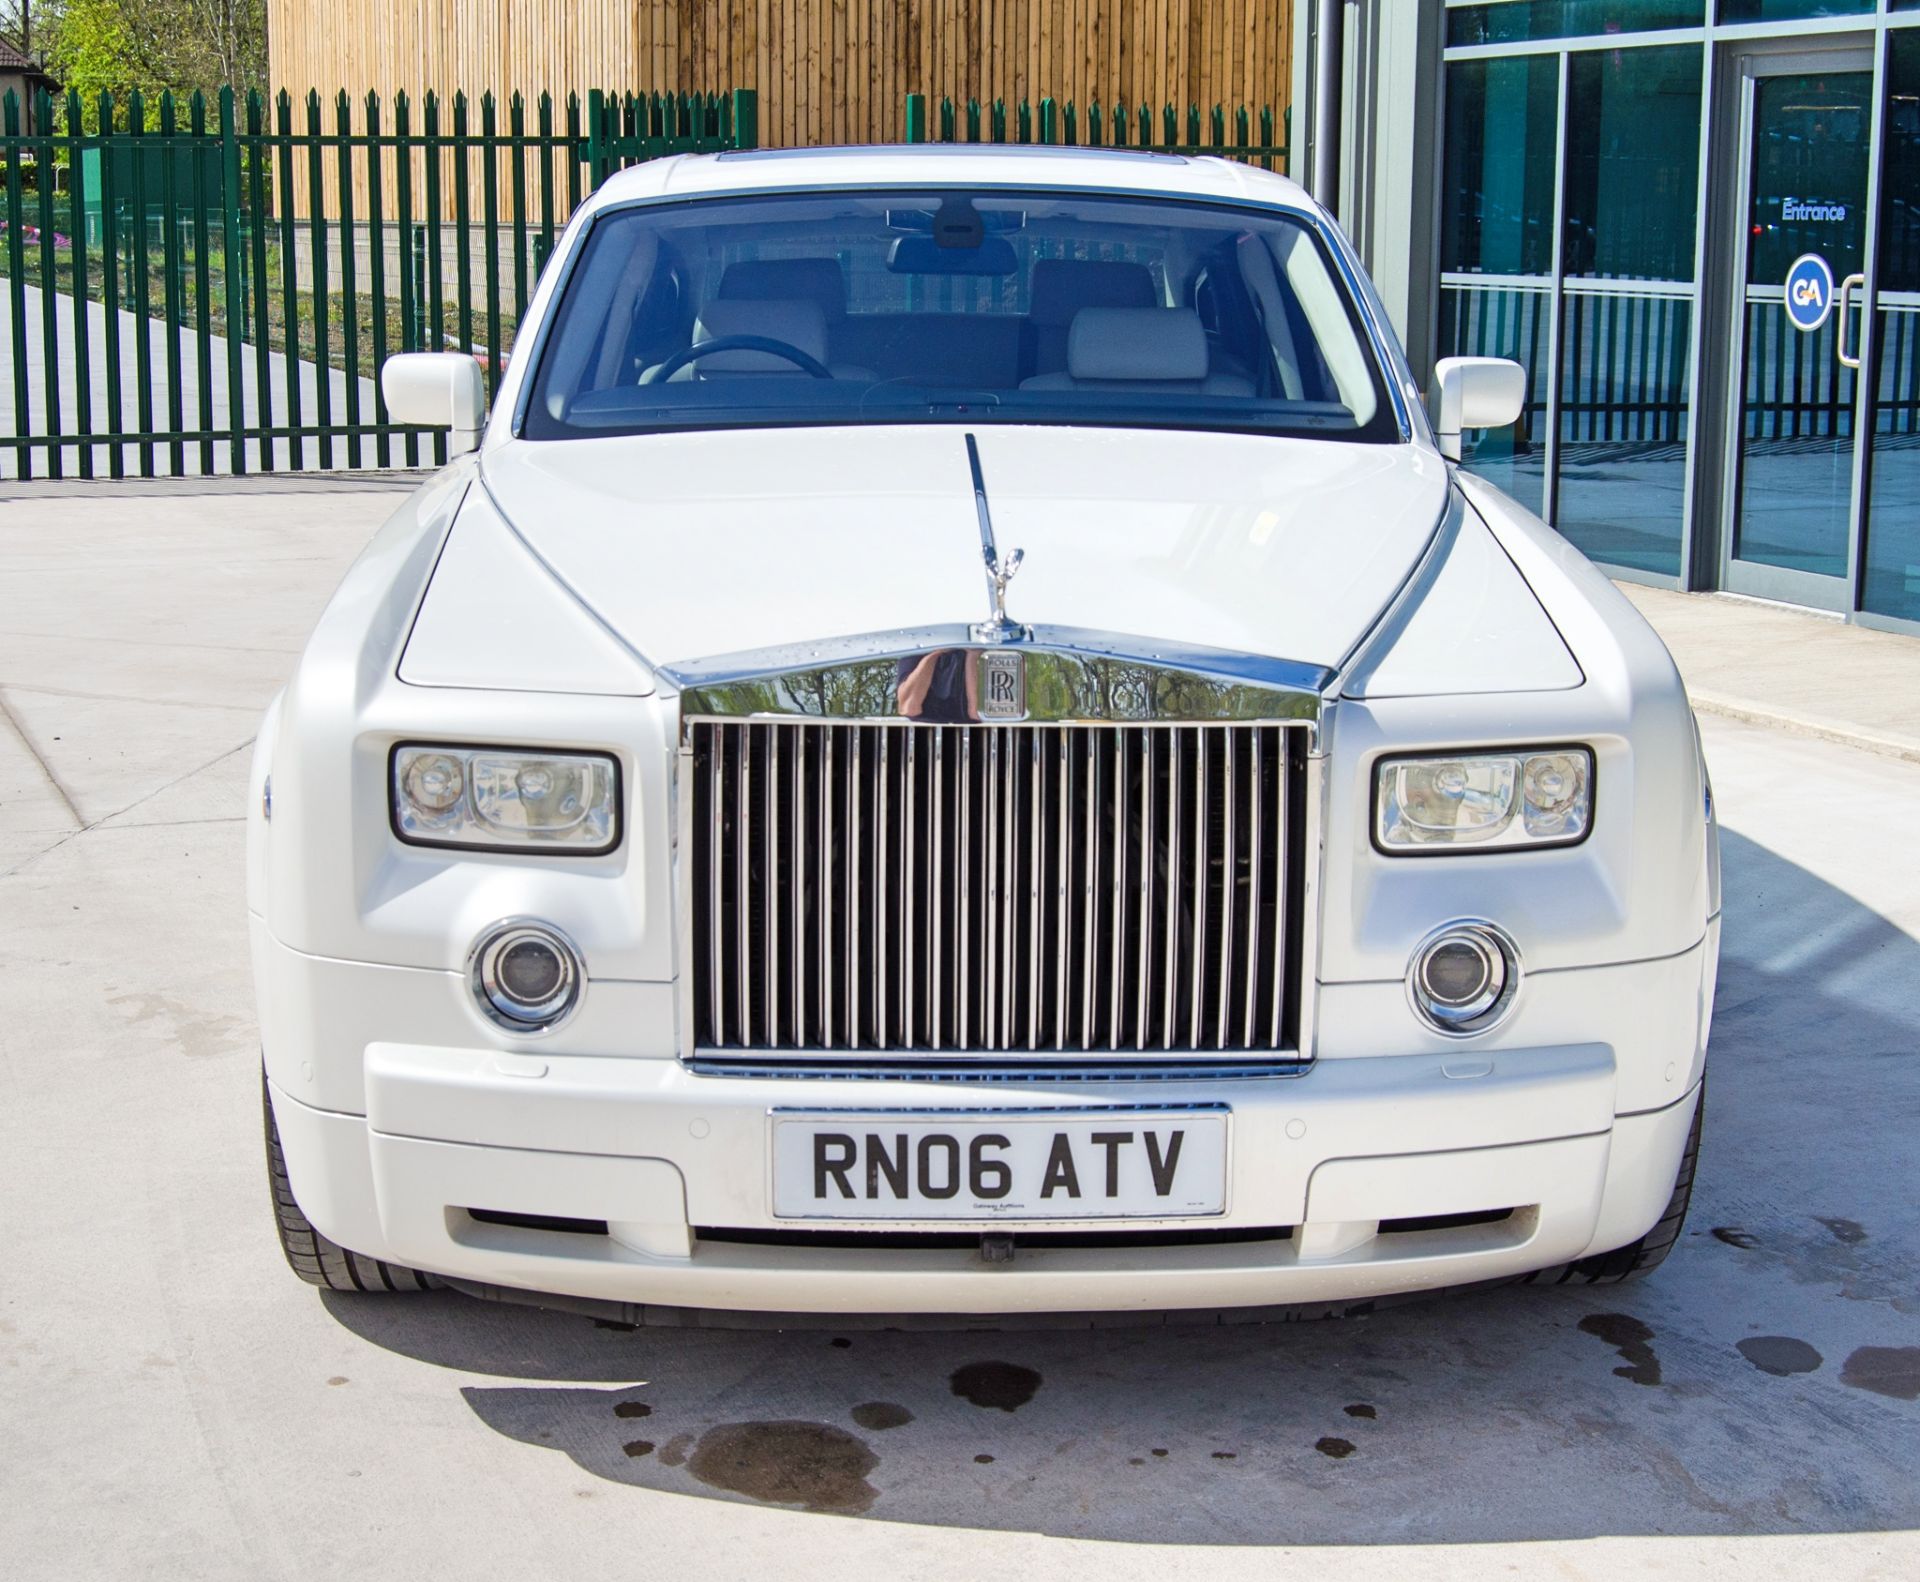 Rolls Royce Phantom 6749cc V12 Auto 4 door saloon car Registration Number: RN06 ATV Date of - Image 10 of 52